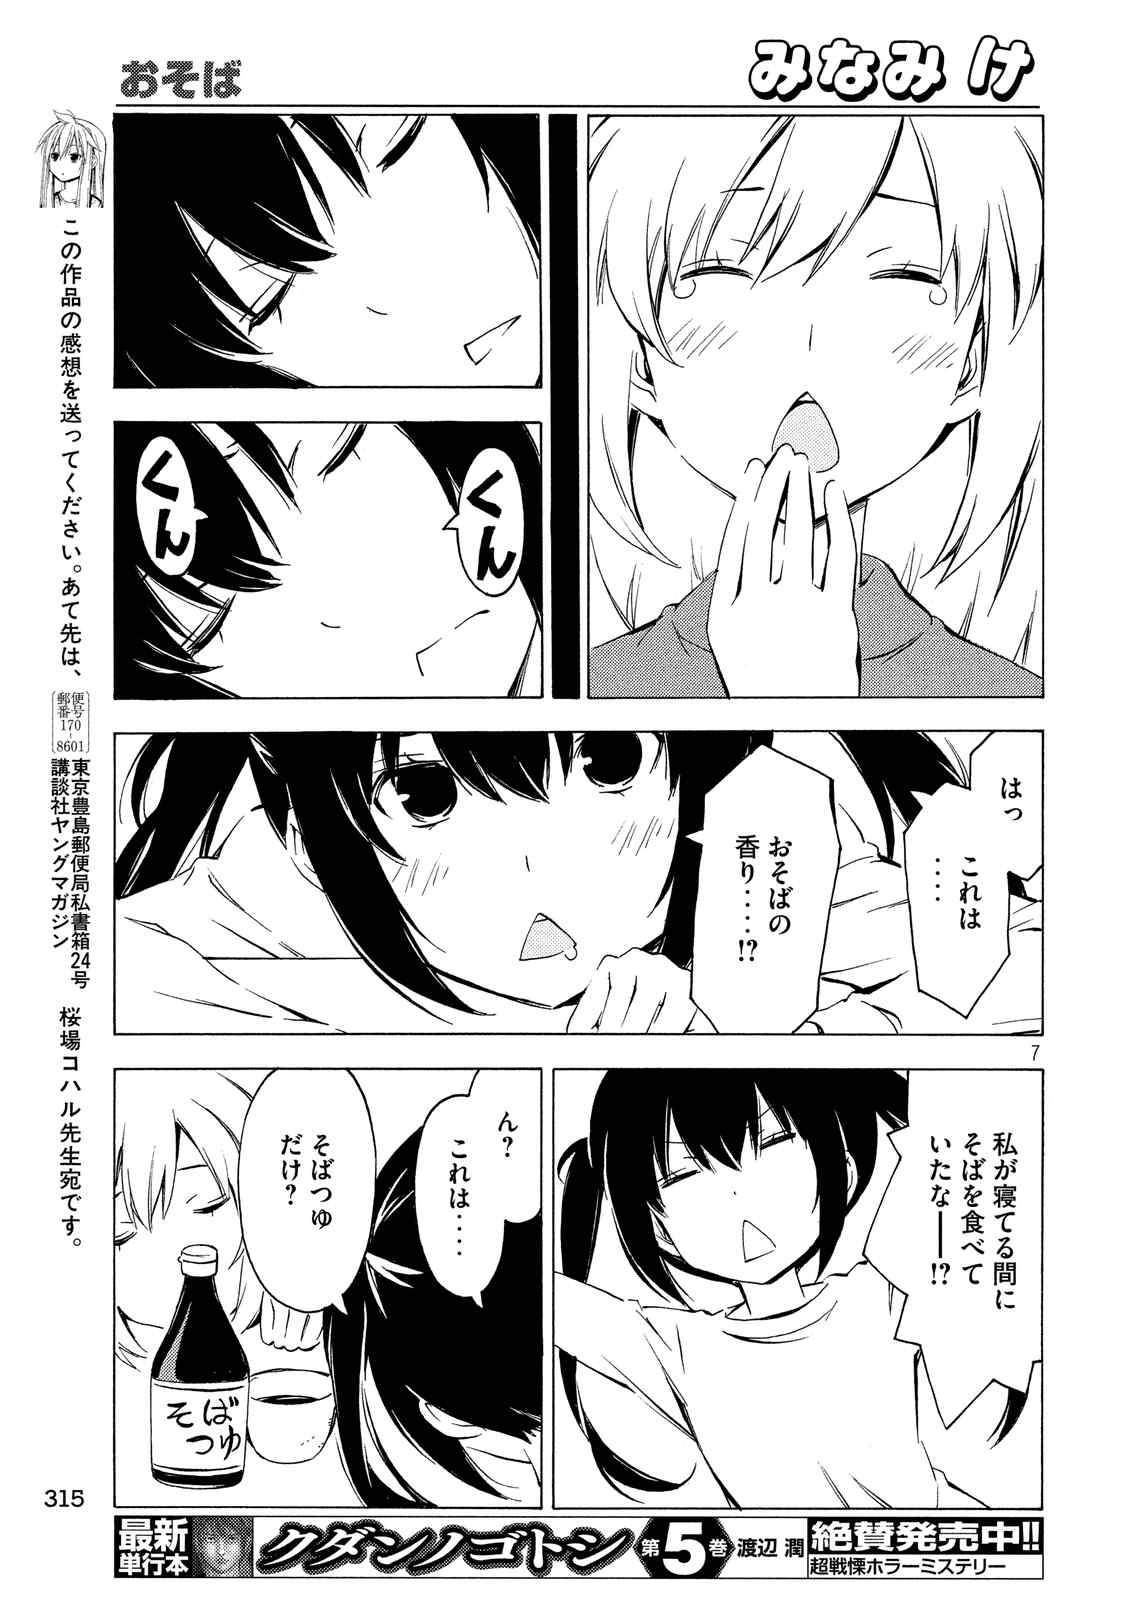 Minami-ke - Chapter 307 - Page 7